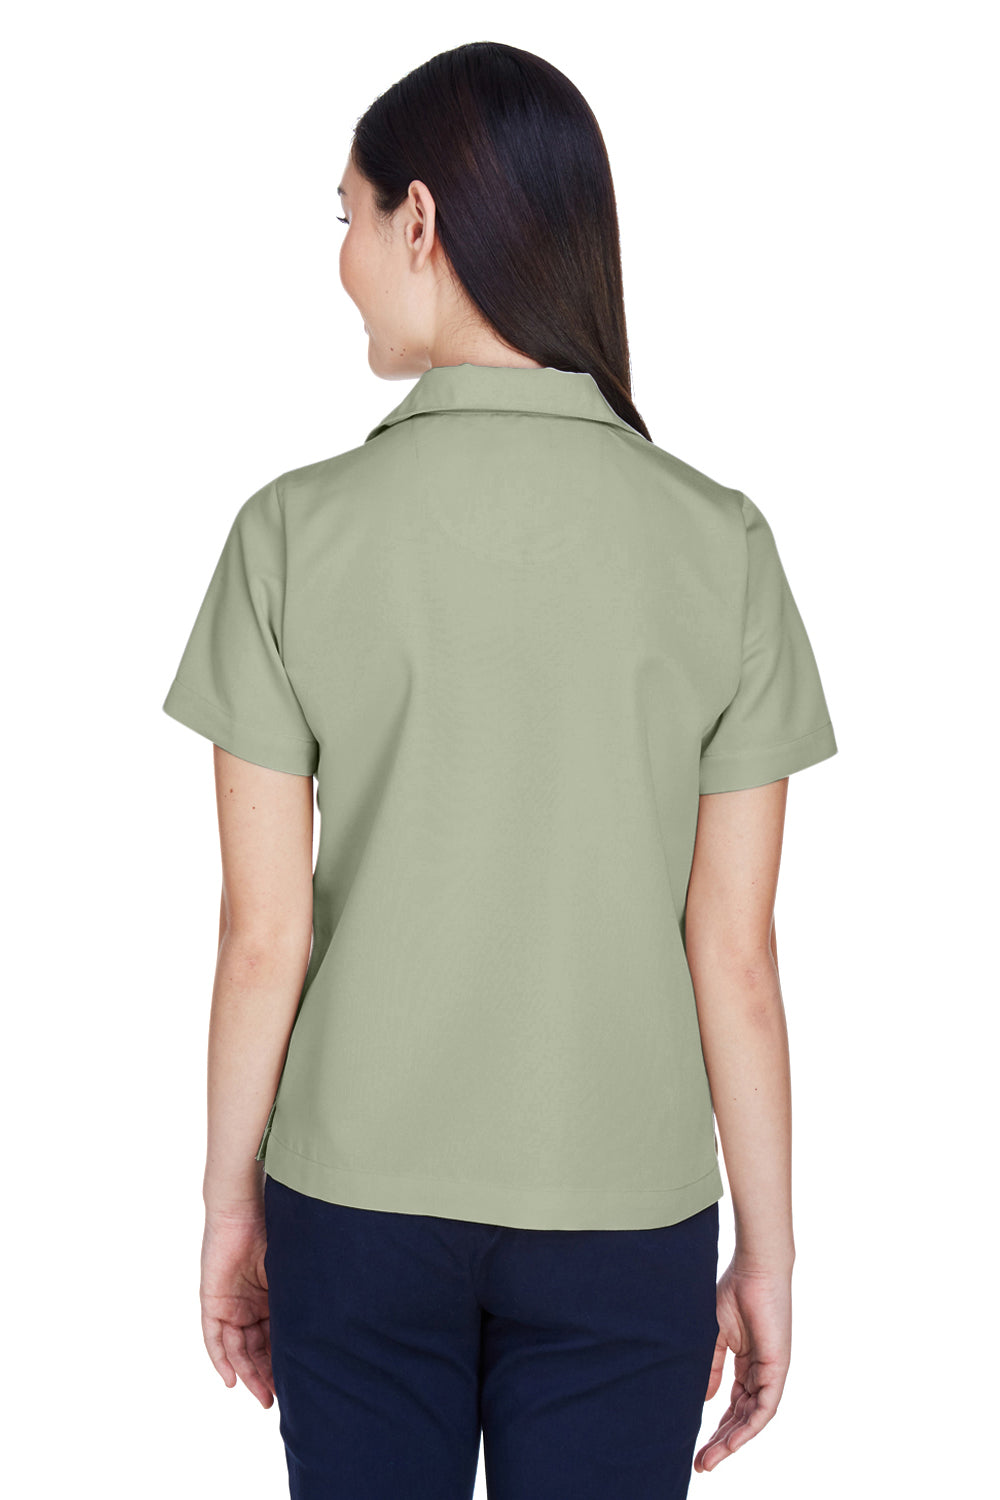 UltraClub 8981 Womens Cabana Breeze Short Sleeve Button Down Camp Shirt w/ Pocket Sage Green Back